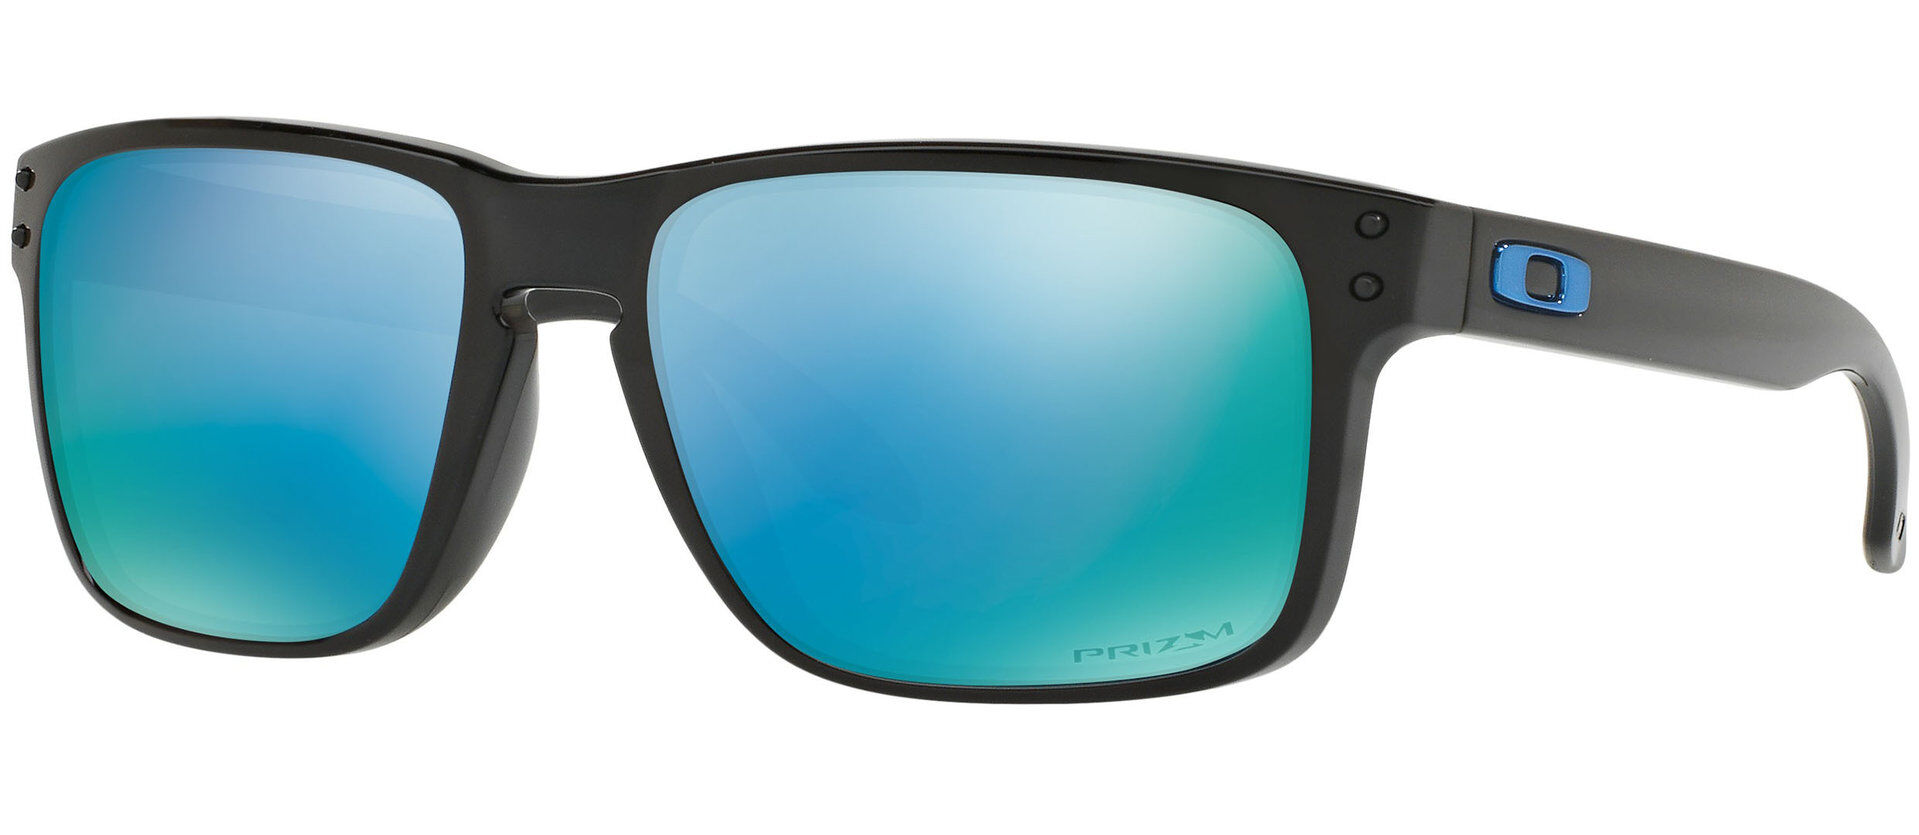 Oakley Holbrook Prizm Water Polarized Gafas de sol - Azul (un tamaño)